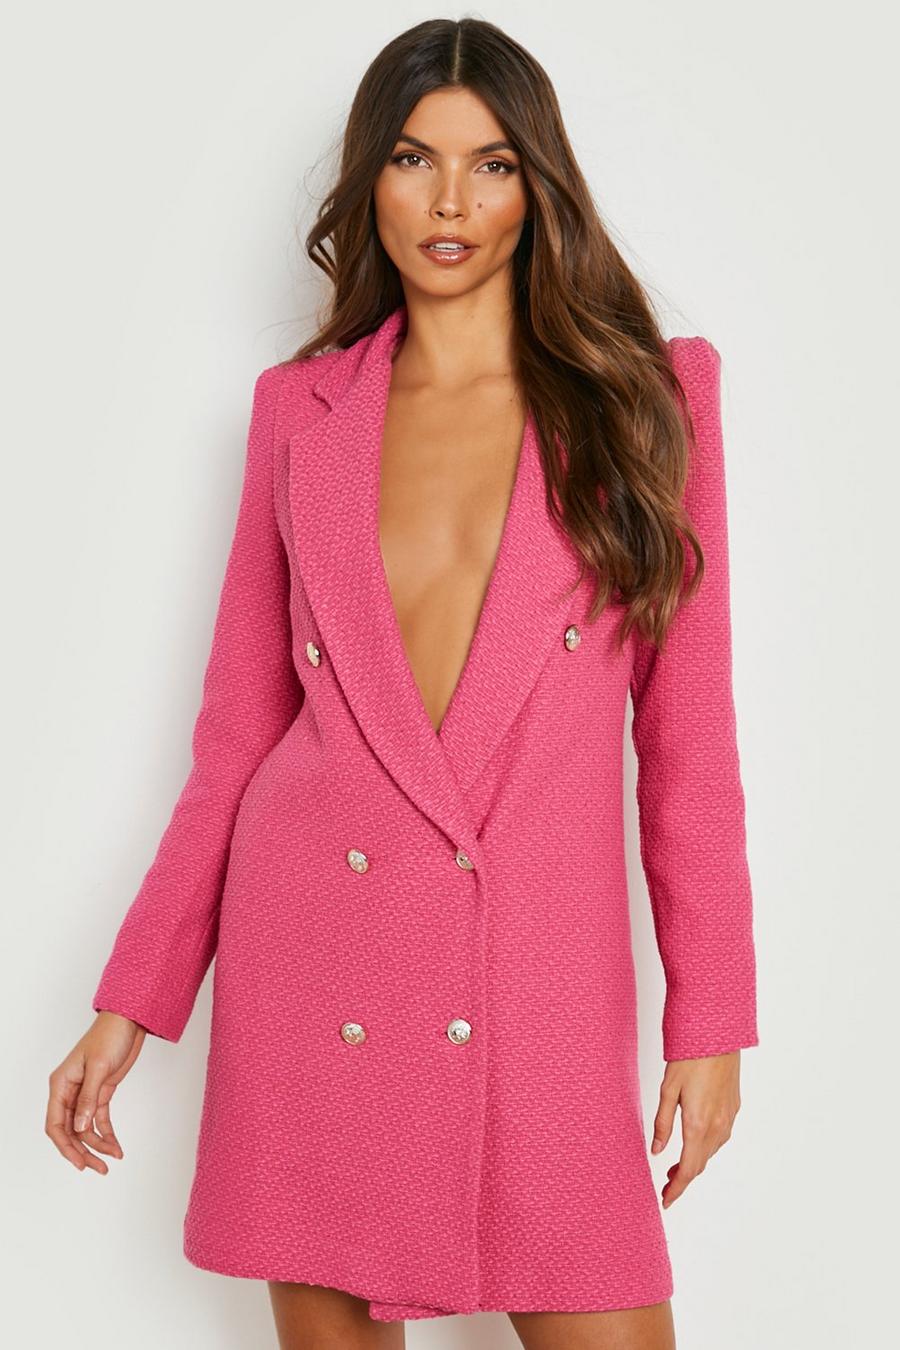 Robe blazer à épaulettes, Hot pink